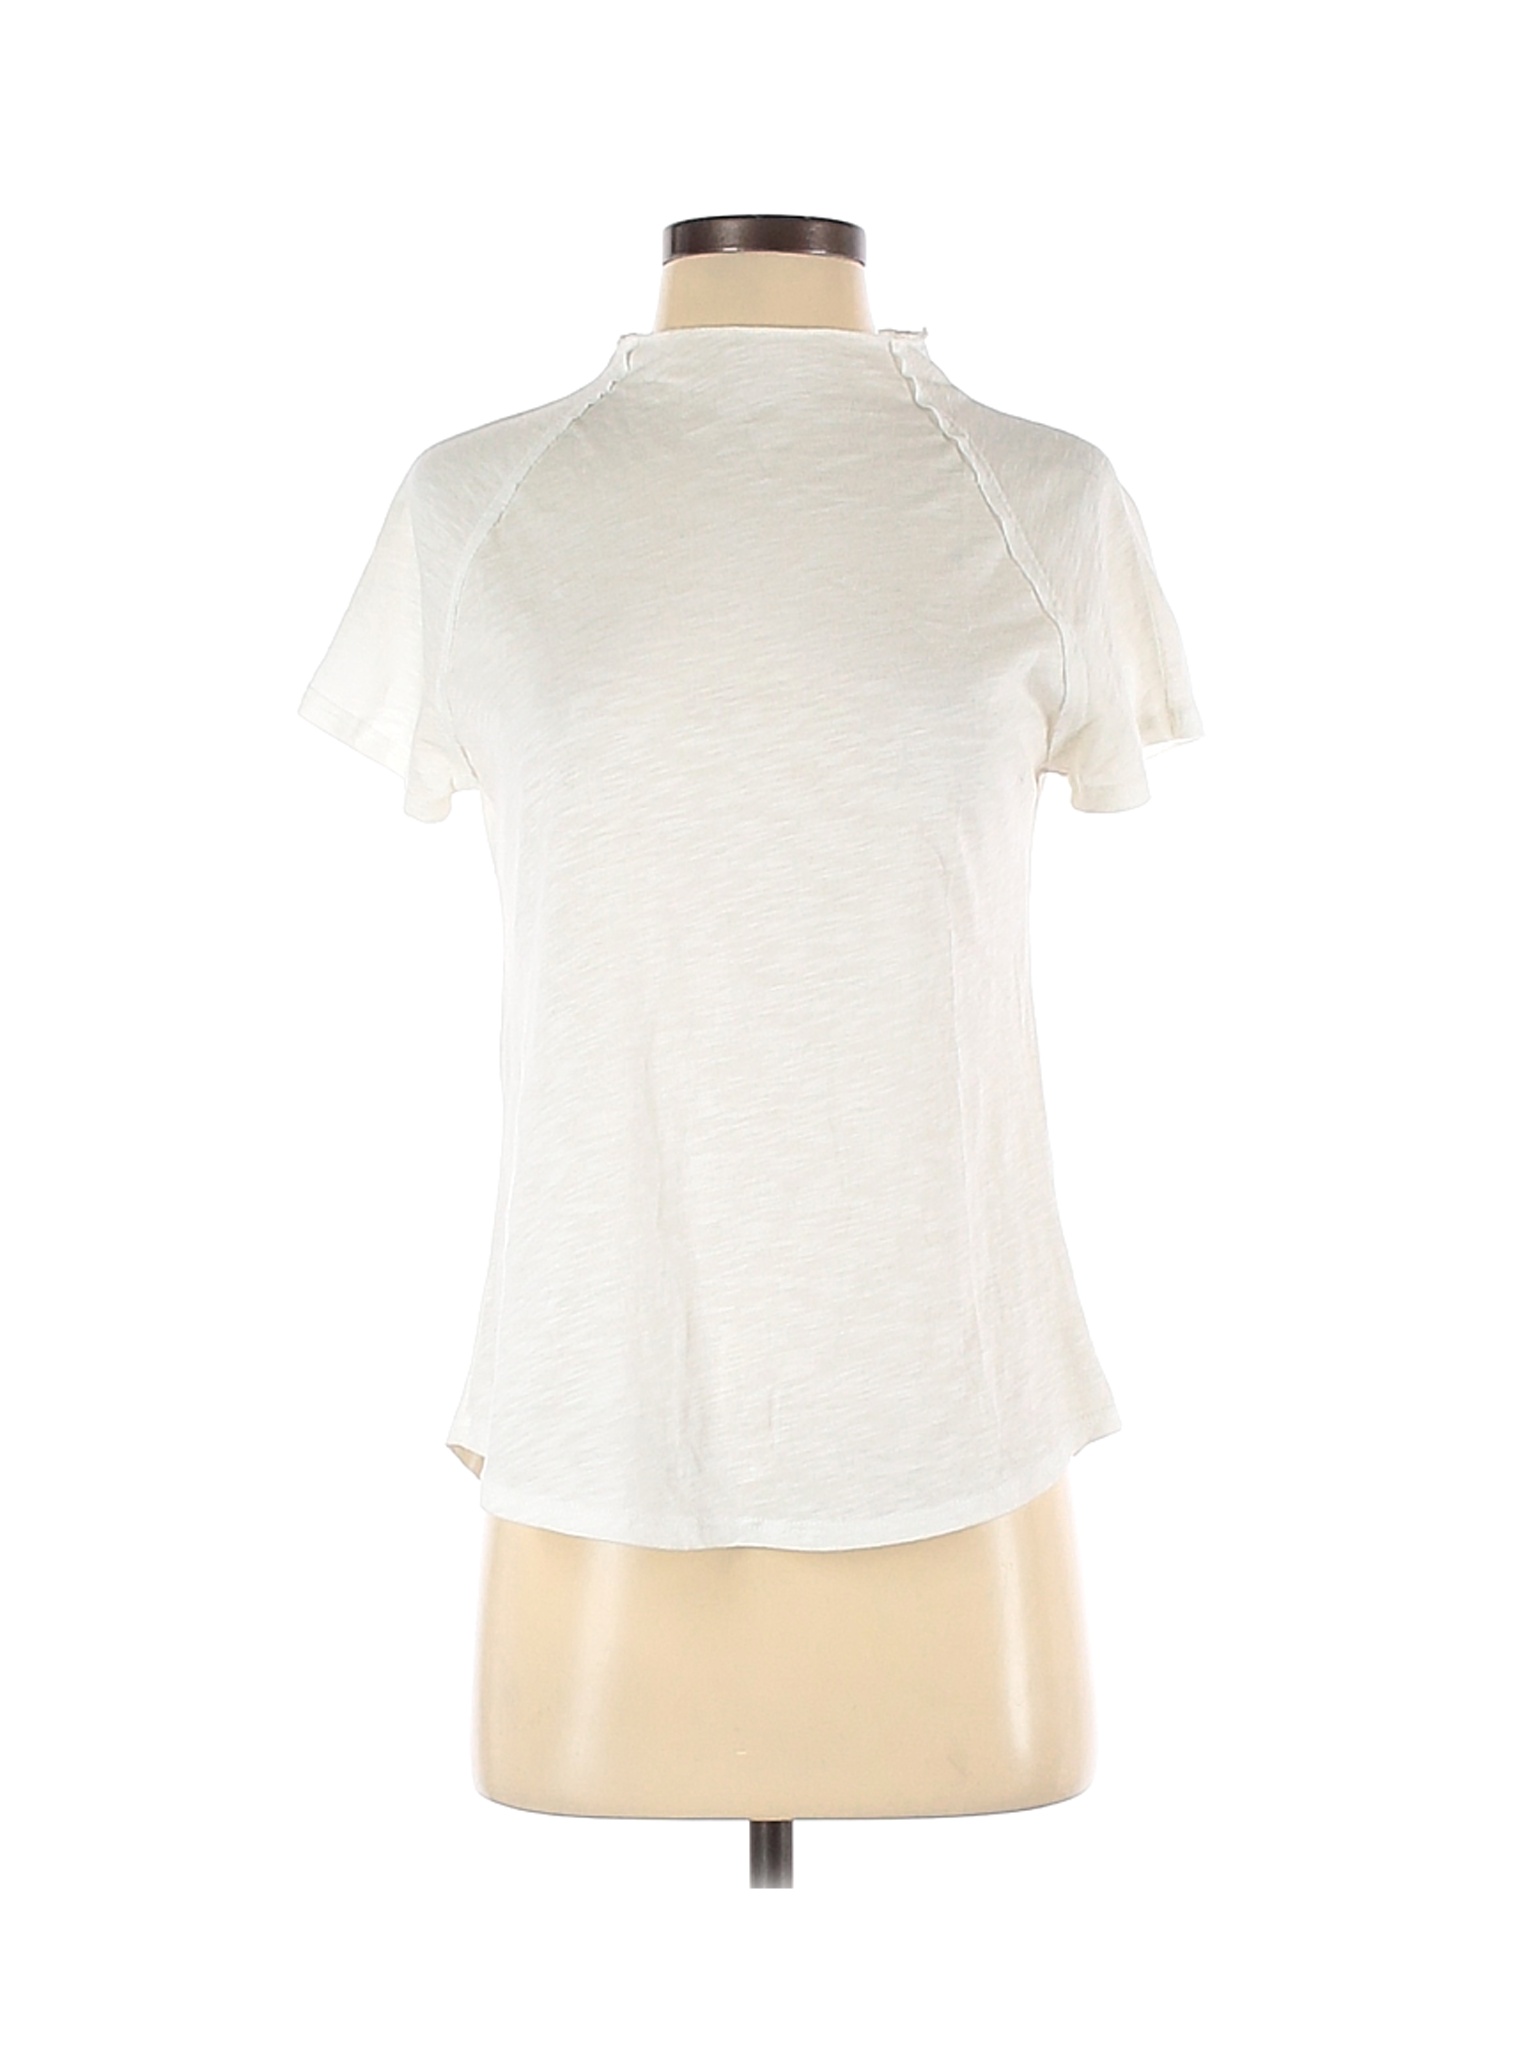 Wasabi + mint Women White Short Sleeve T-Shirt S | eBay